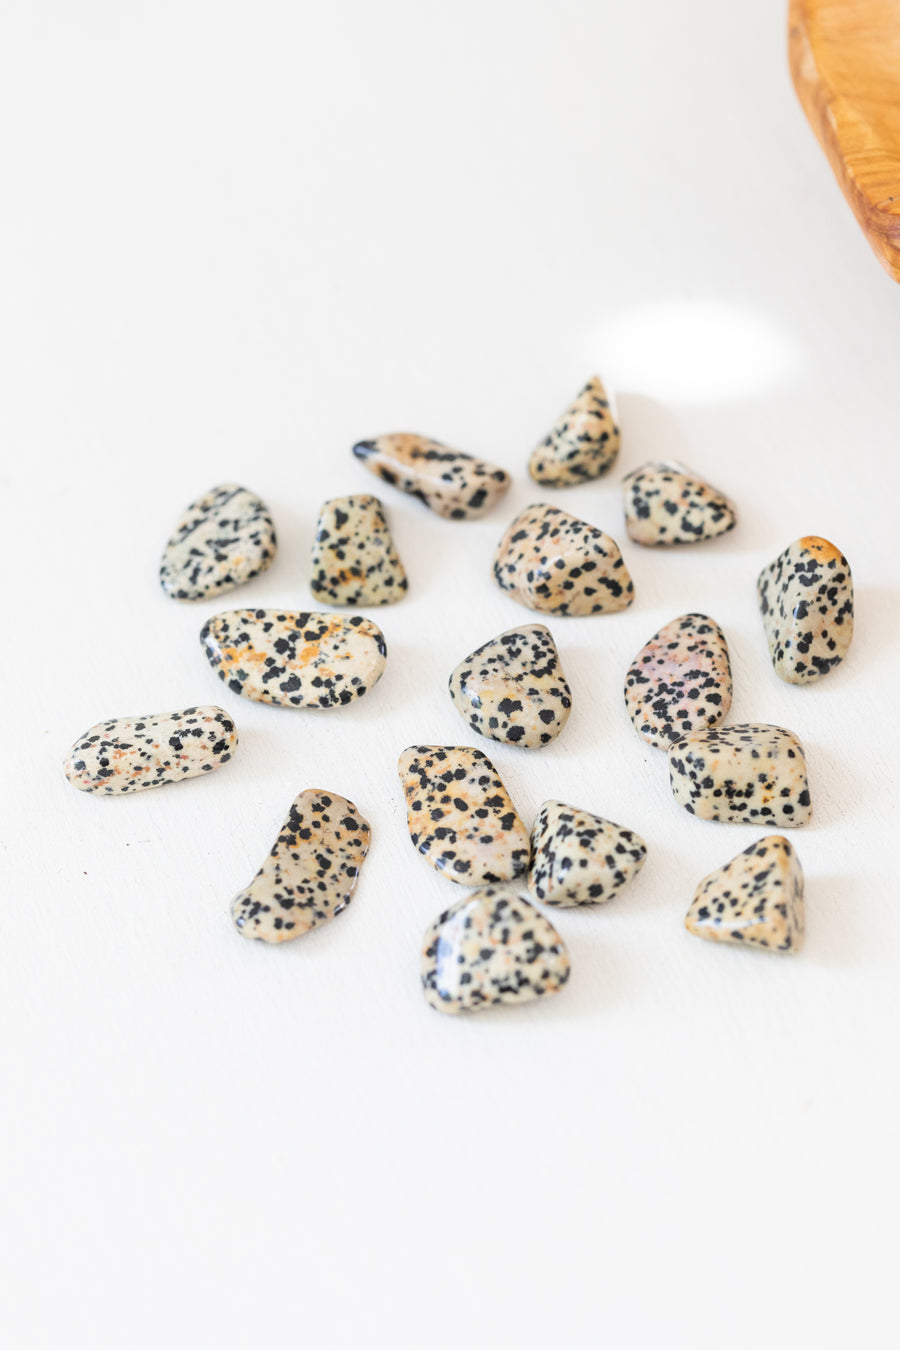 Dalmatian Stone - Tumbled